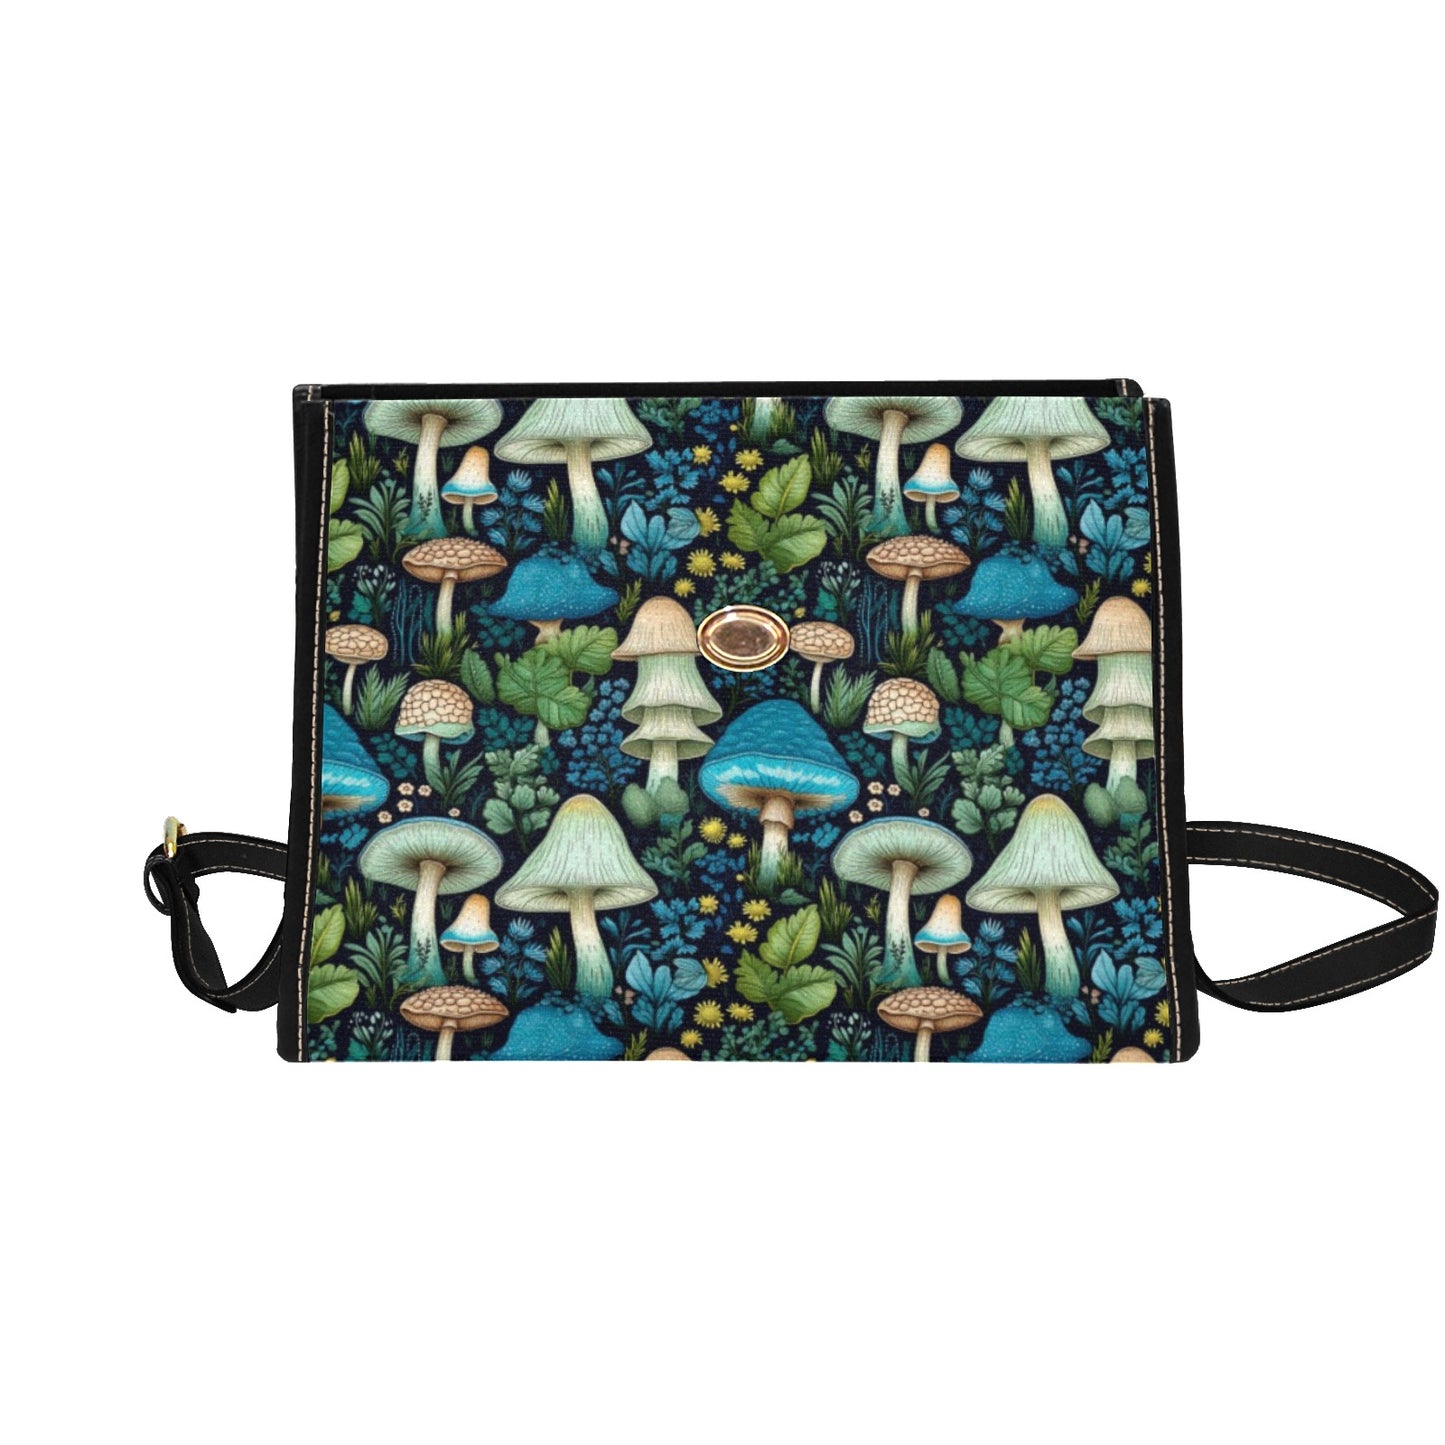 Mushroomcore Shoulder Satchel - Blue and Green Mushroom Bag (AMUSHSATCH2)